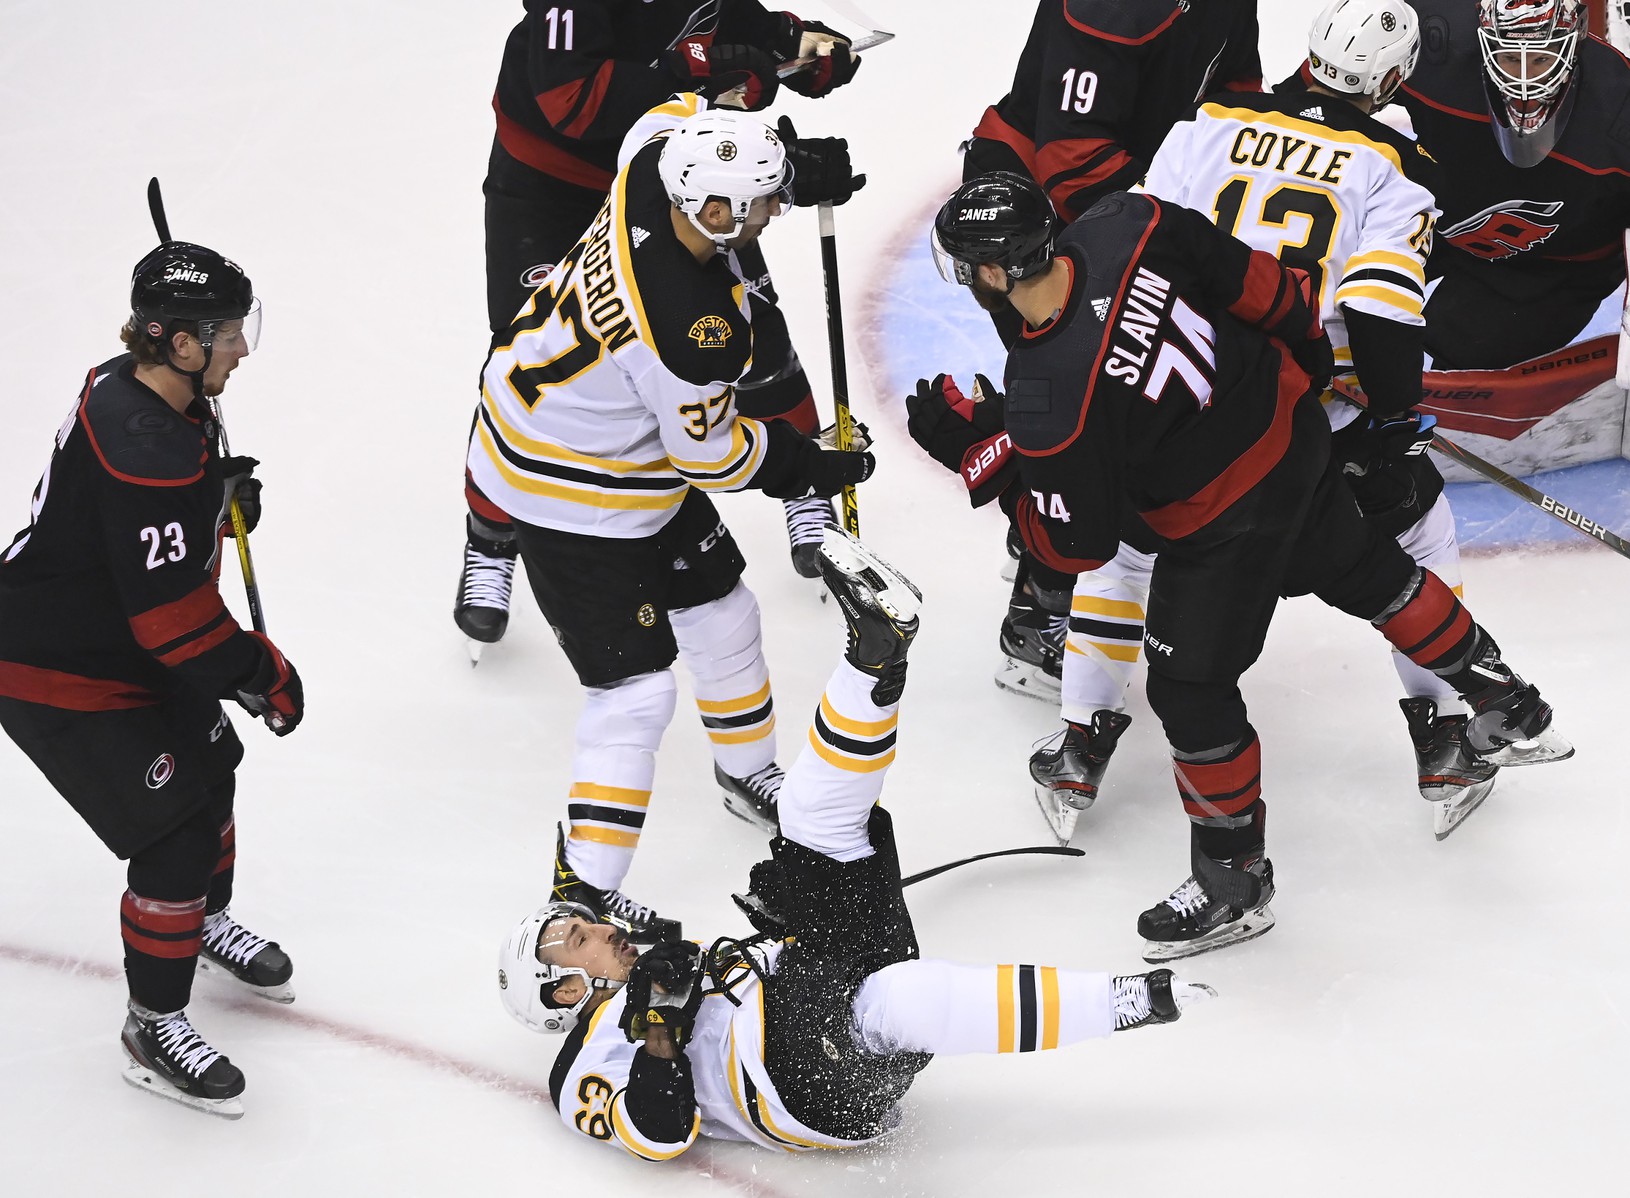 Momentka zo zápasu Bruins